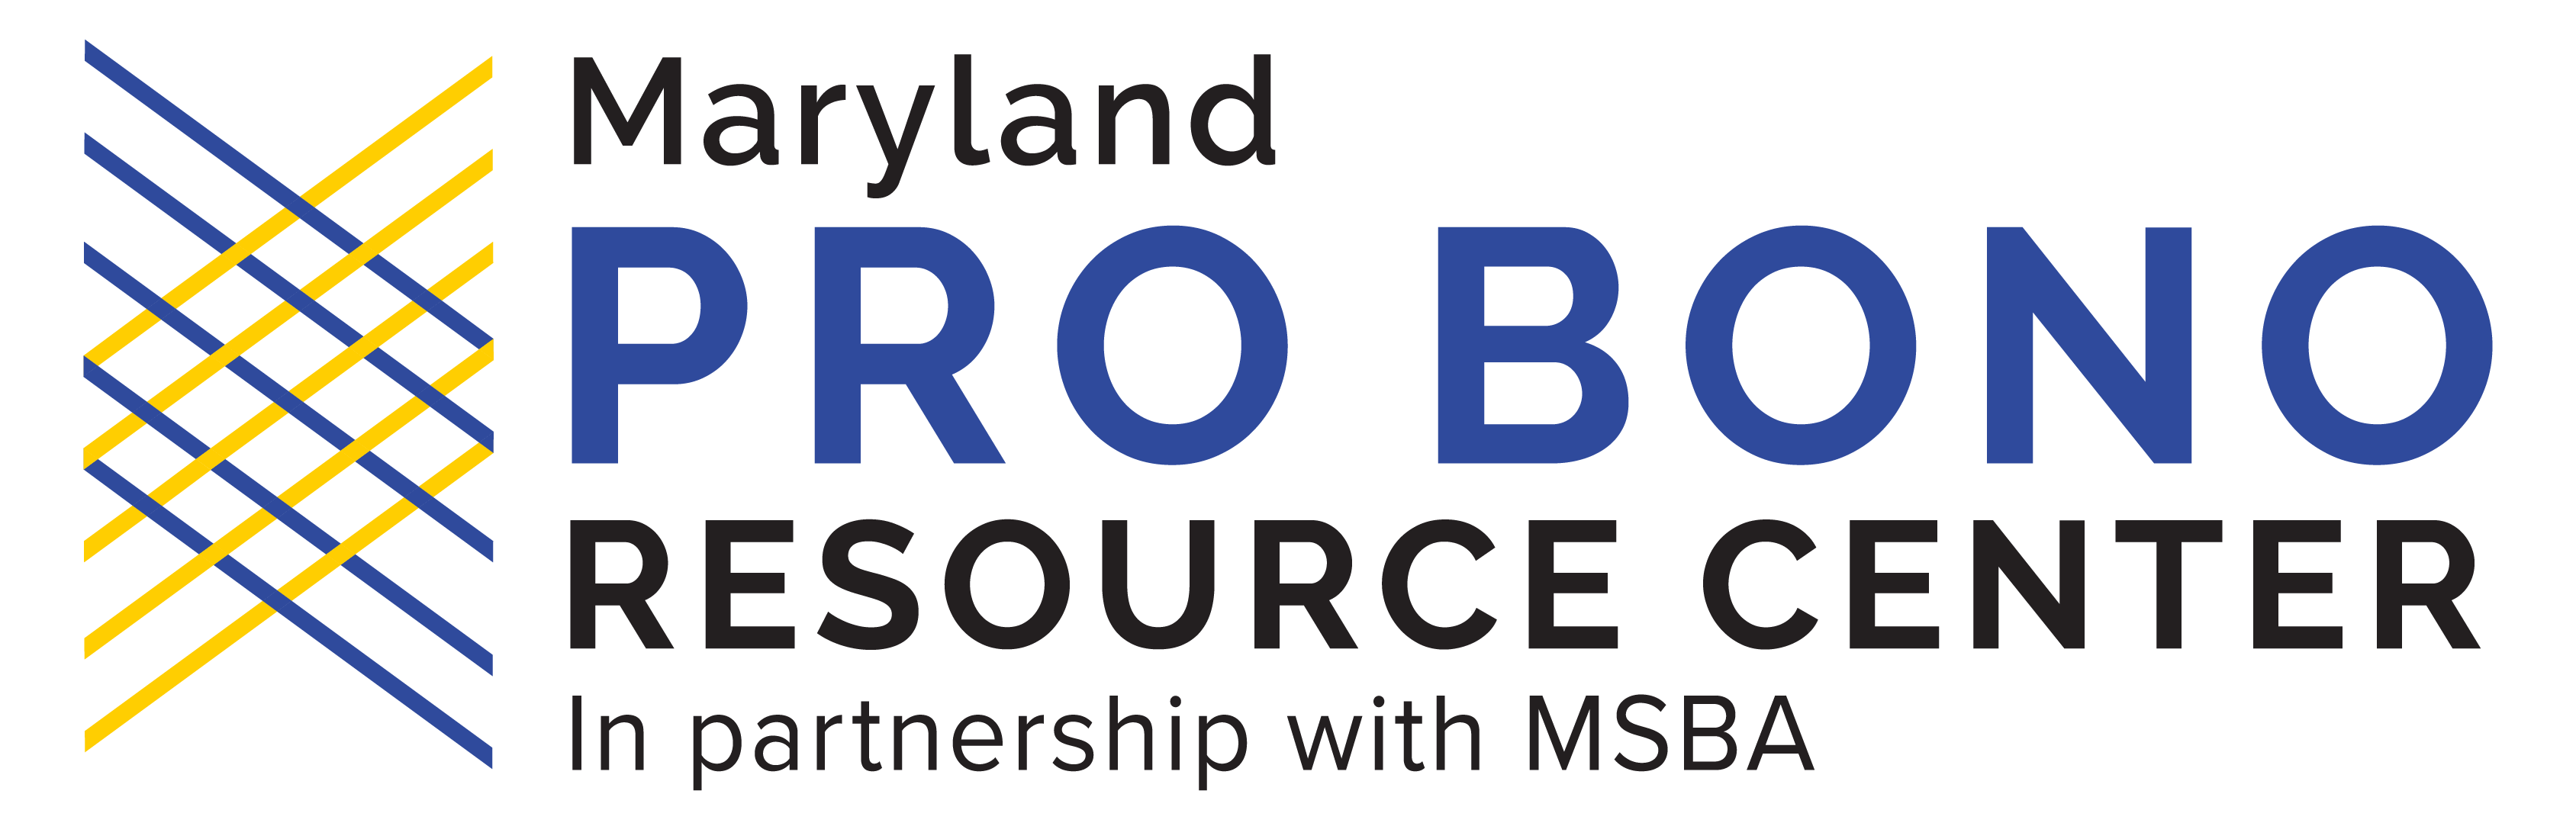 Pro Bono Resource Center of Maryland